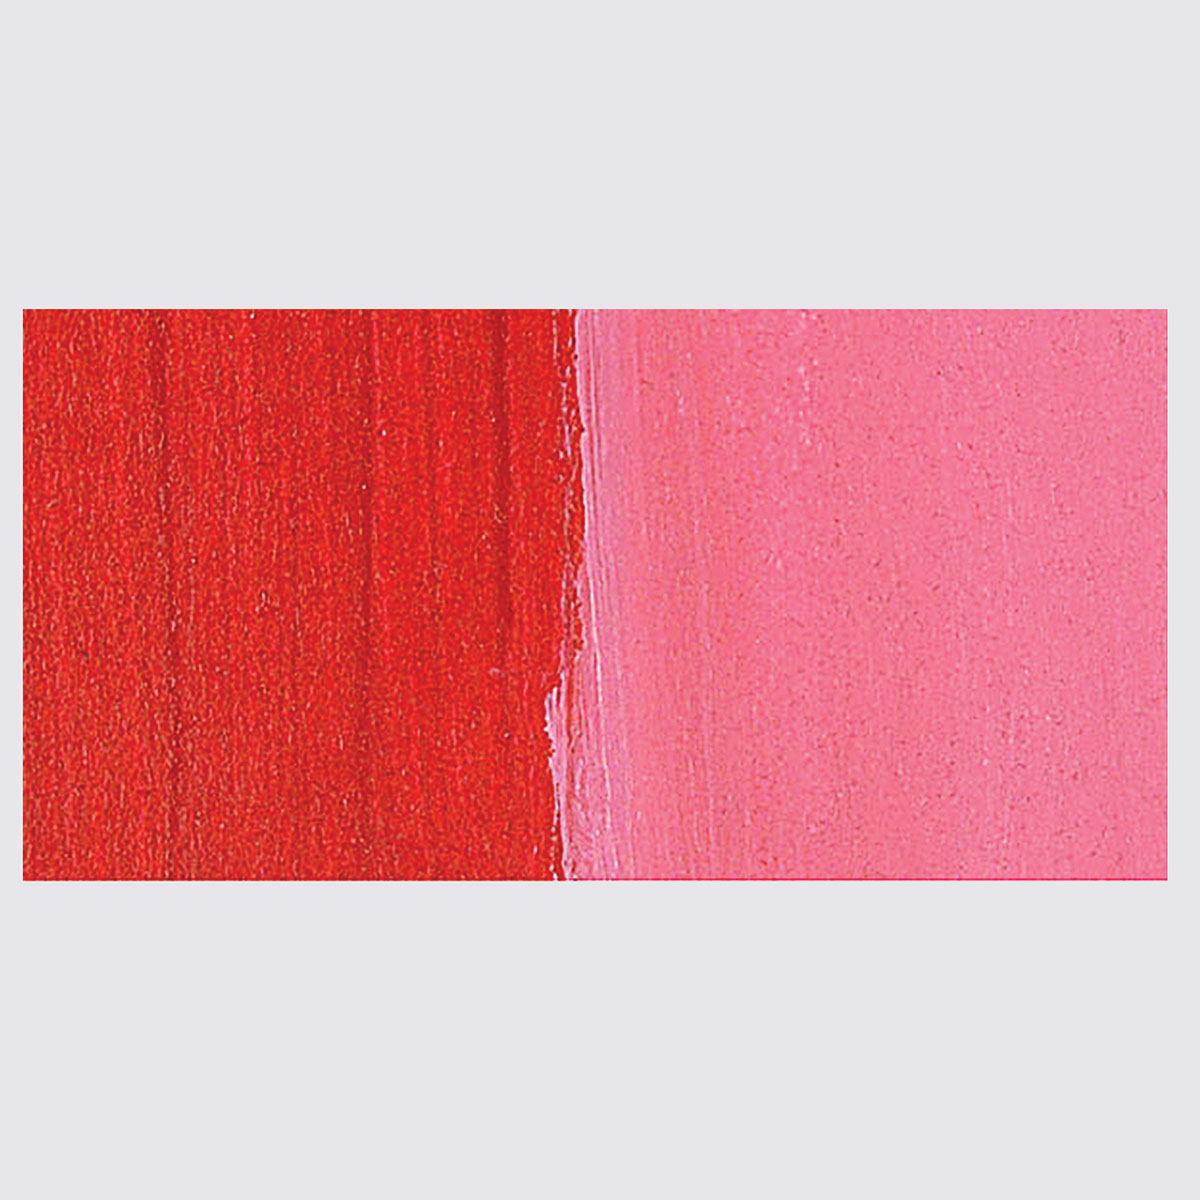 Liquitex Professional Heavy Body Acrylic Alizarin Crimson Hue Permanent 32oz/946ml